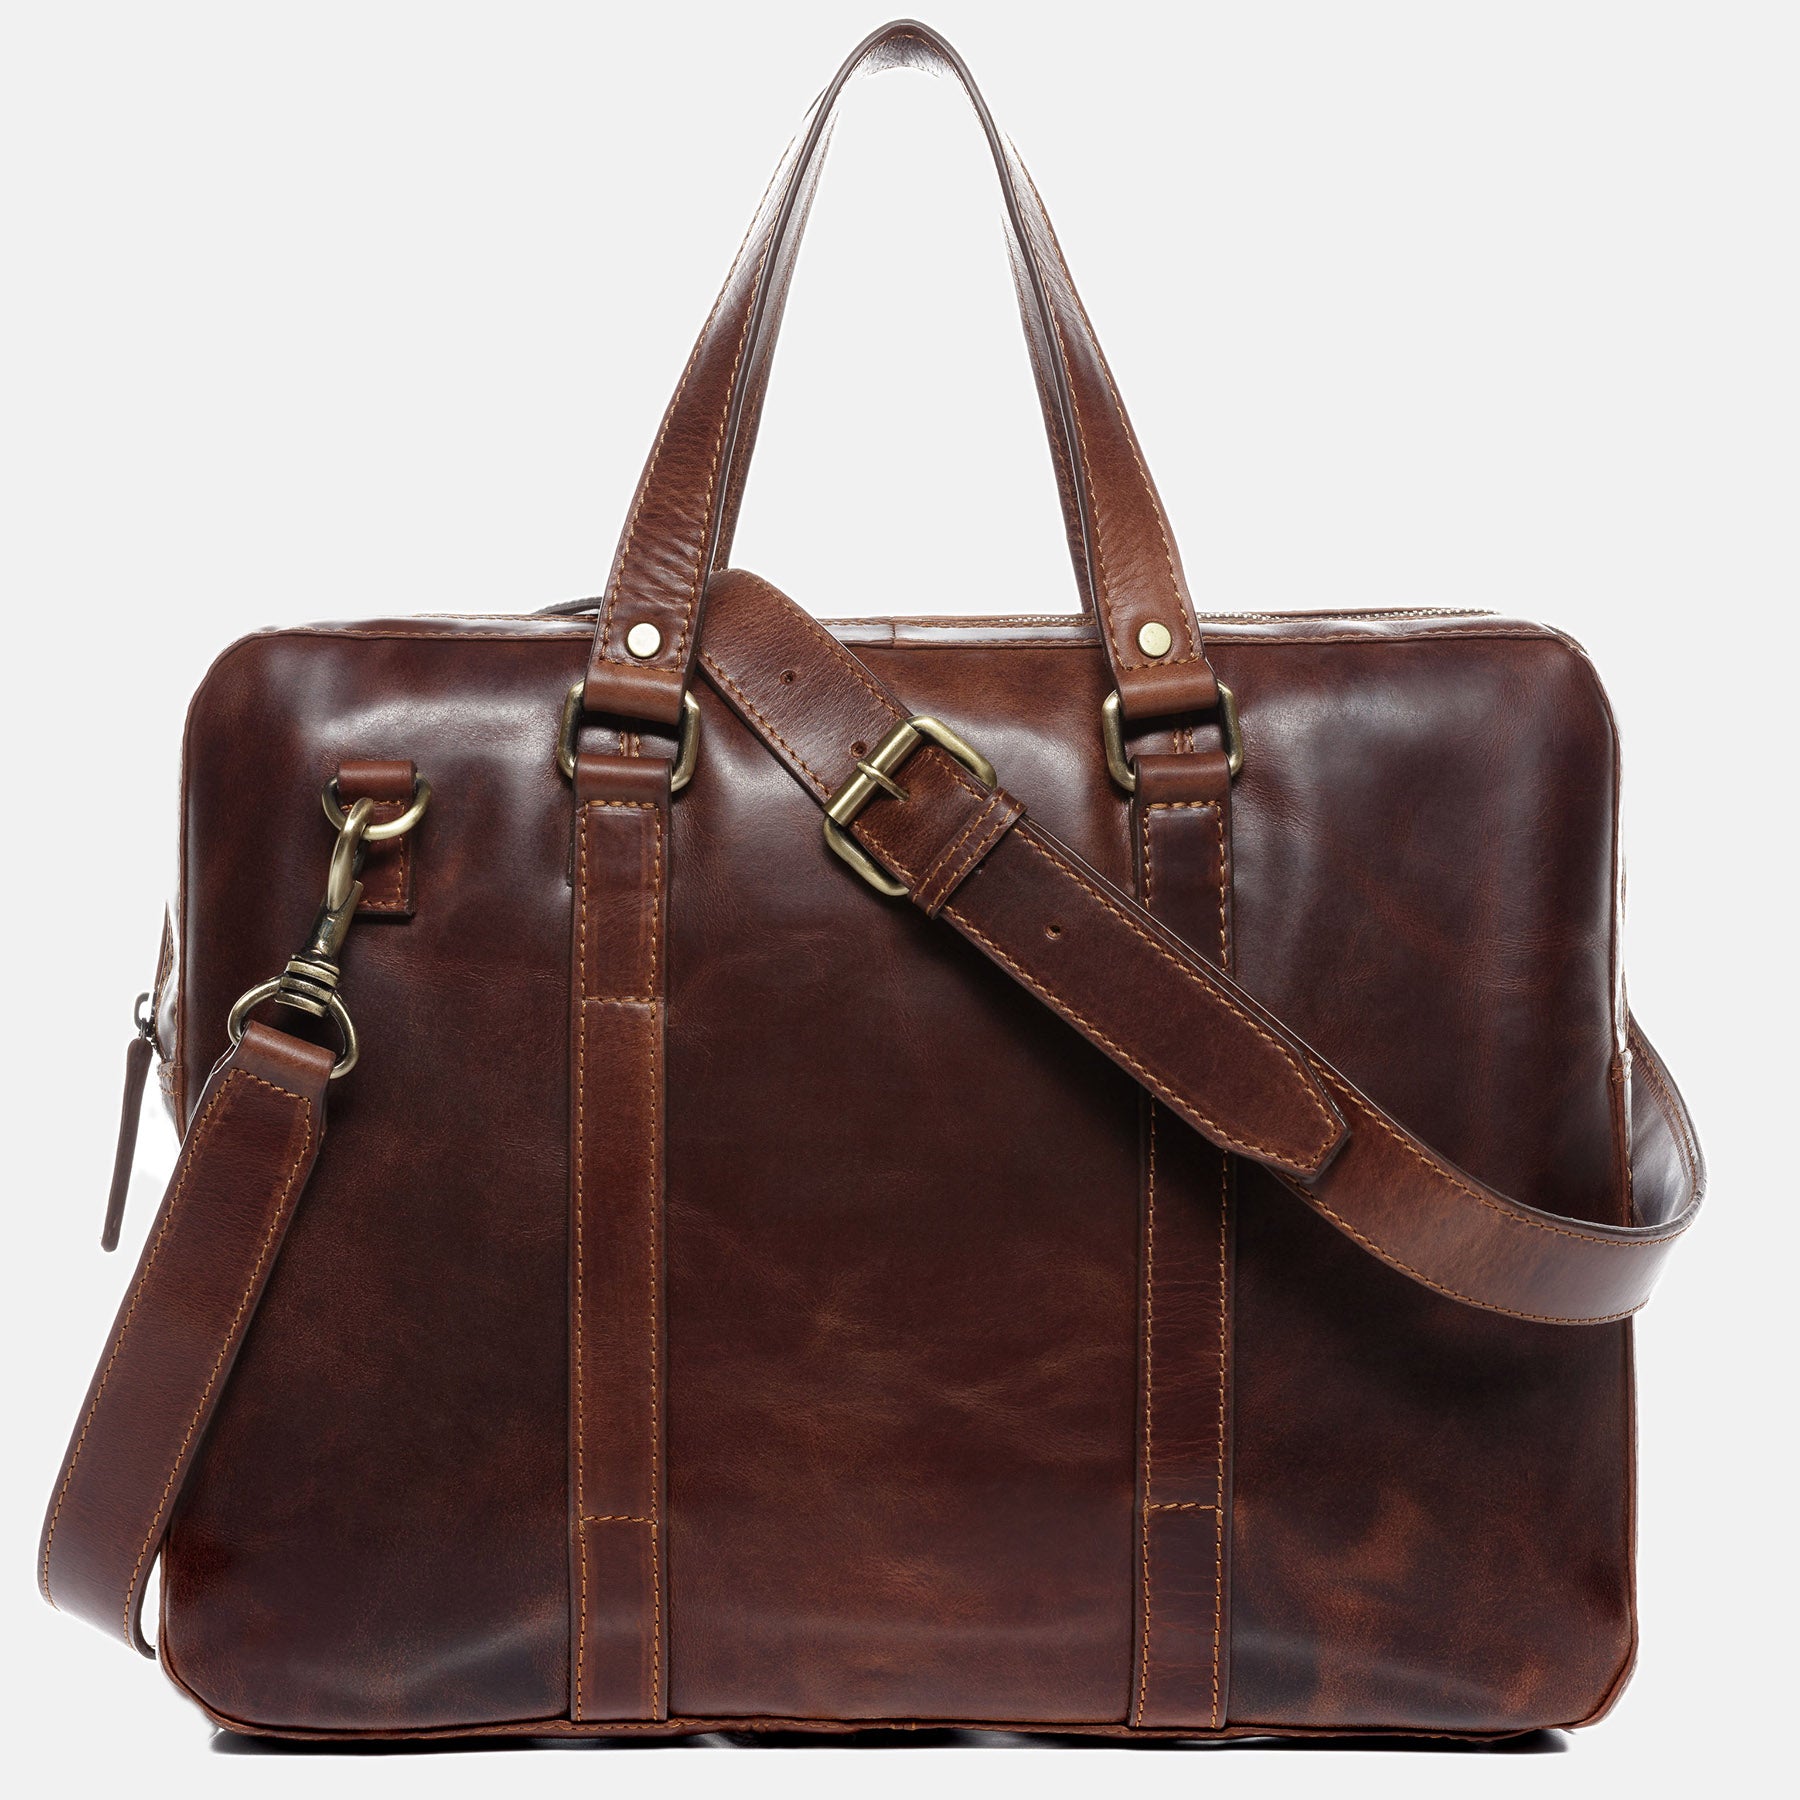 Laptop bag Maguire natural leather brown-cognac